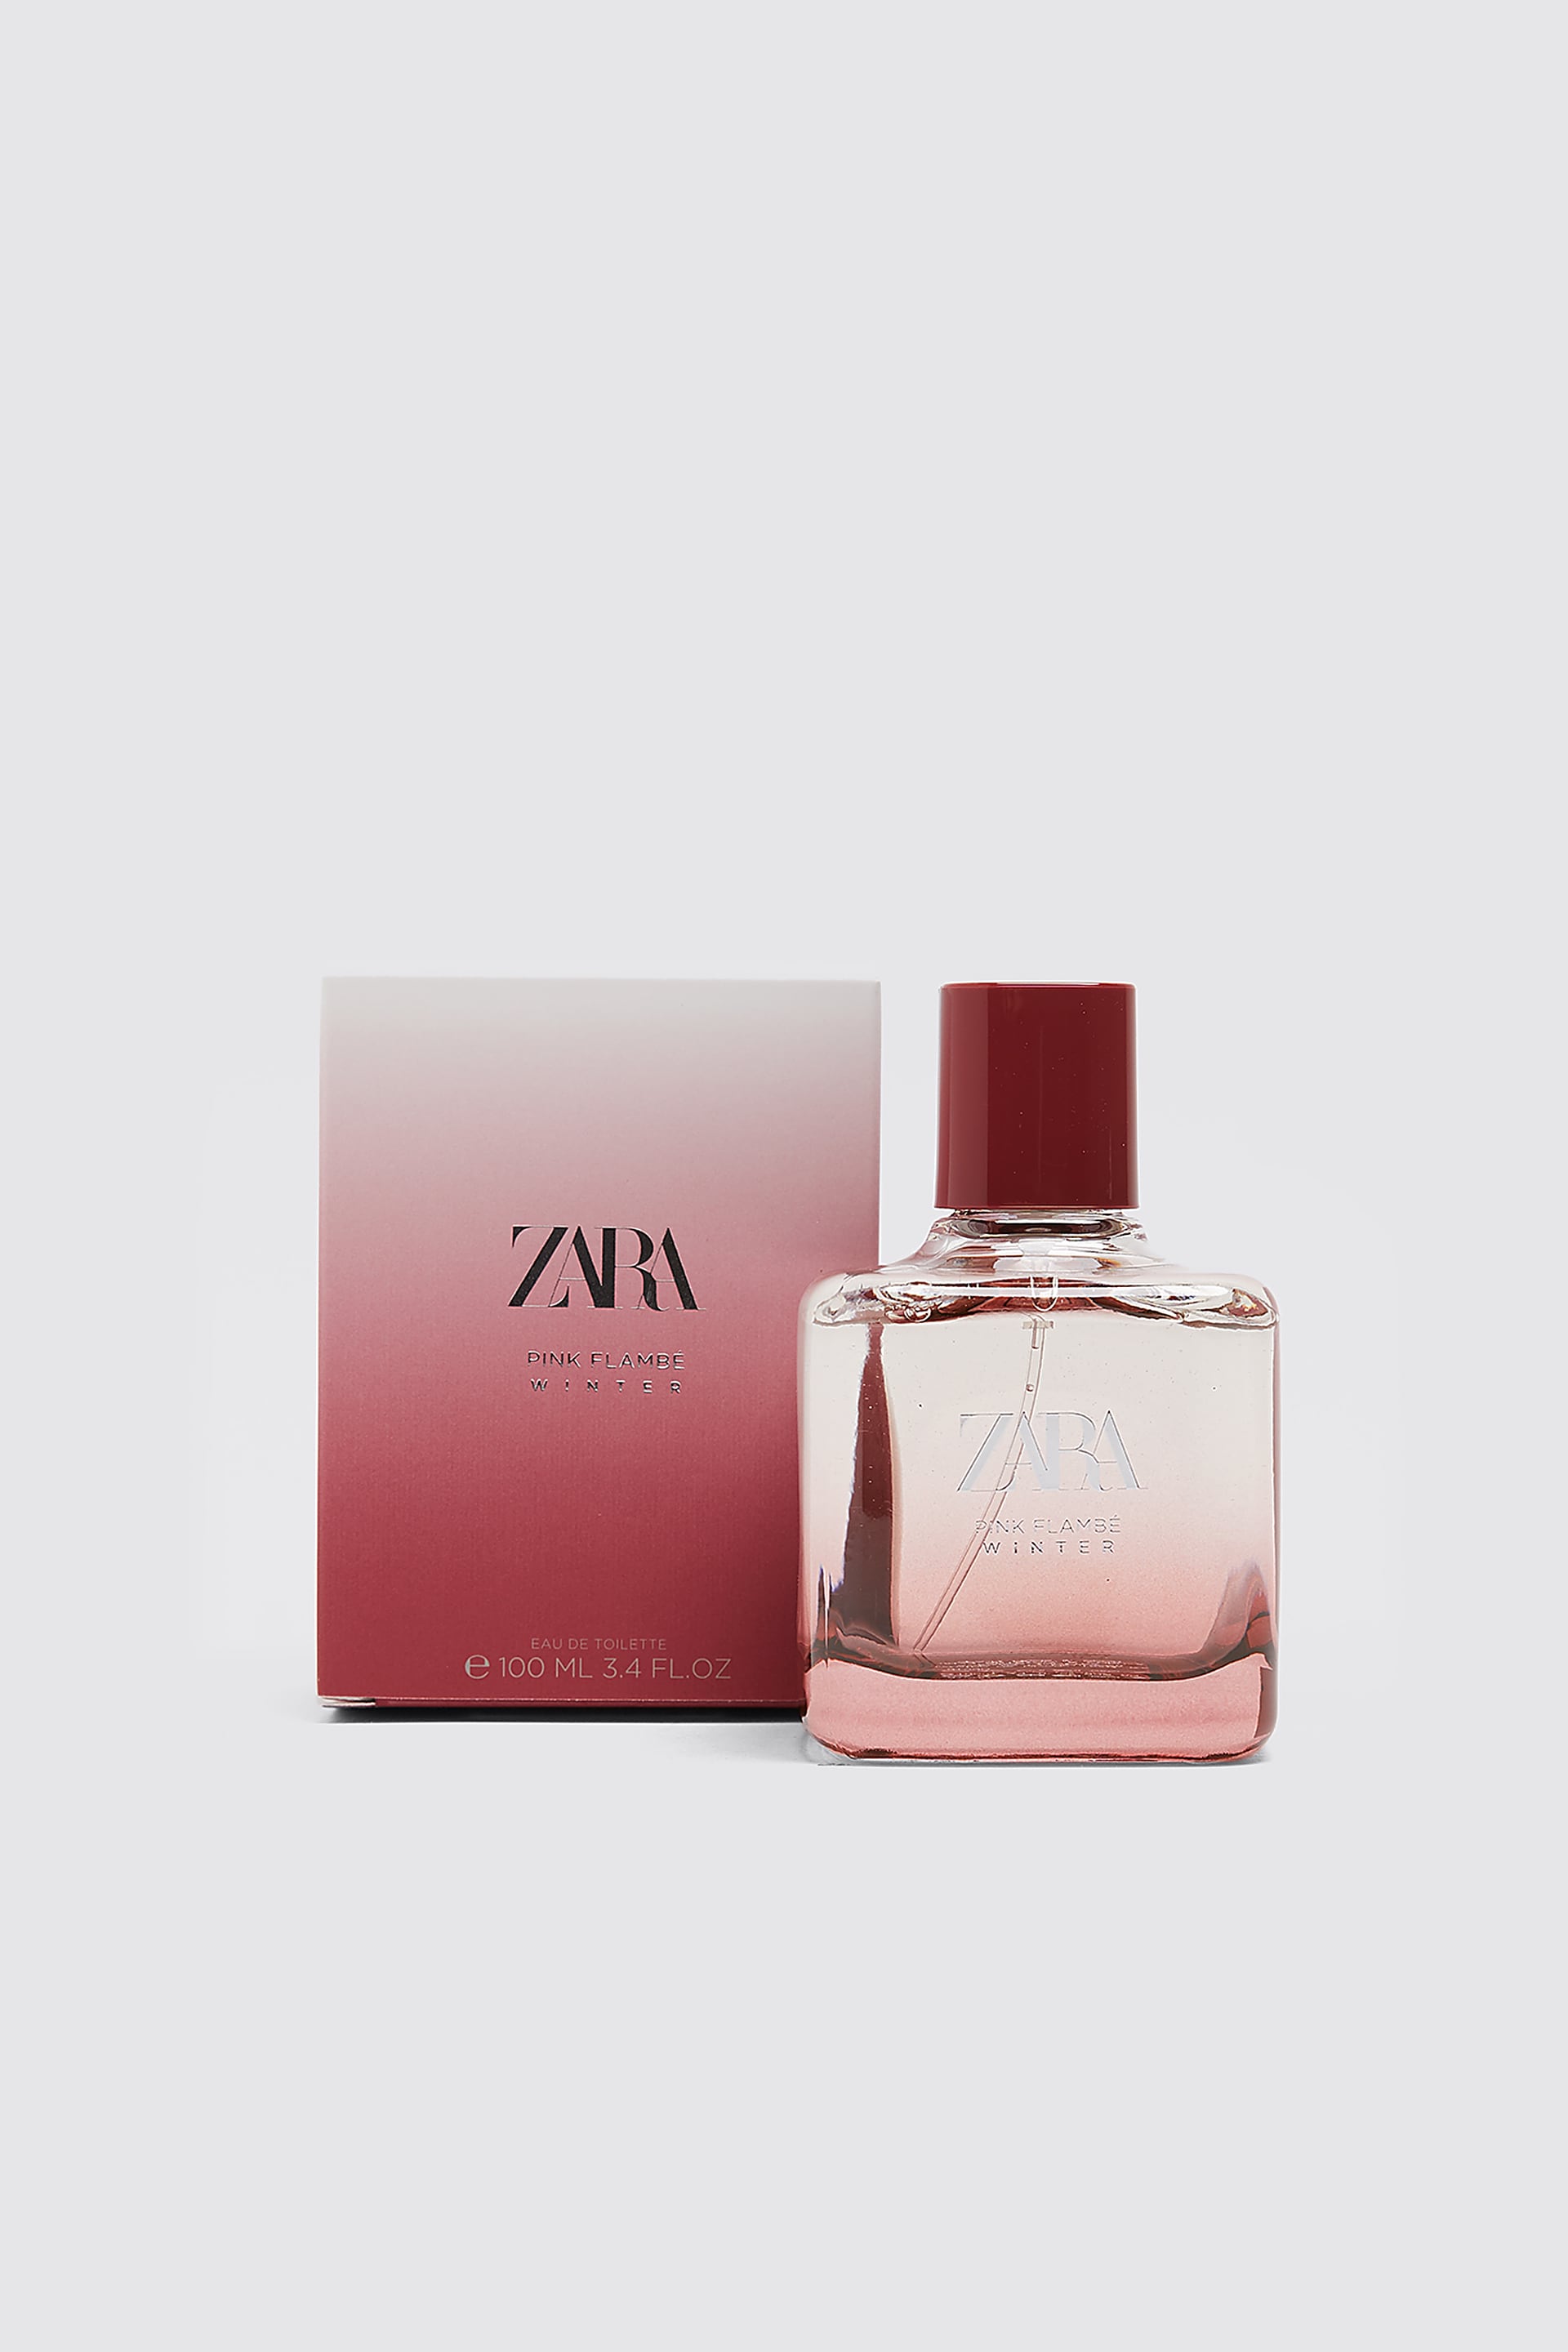 Pink Flambe Winter Zara perfume - a new 